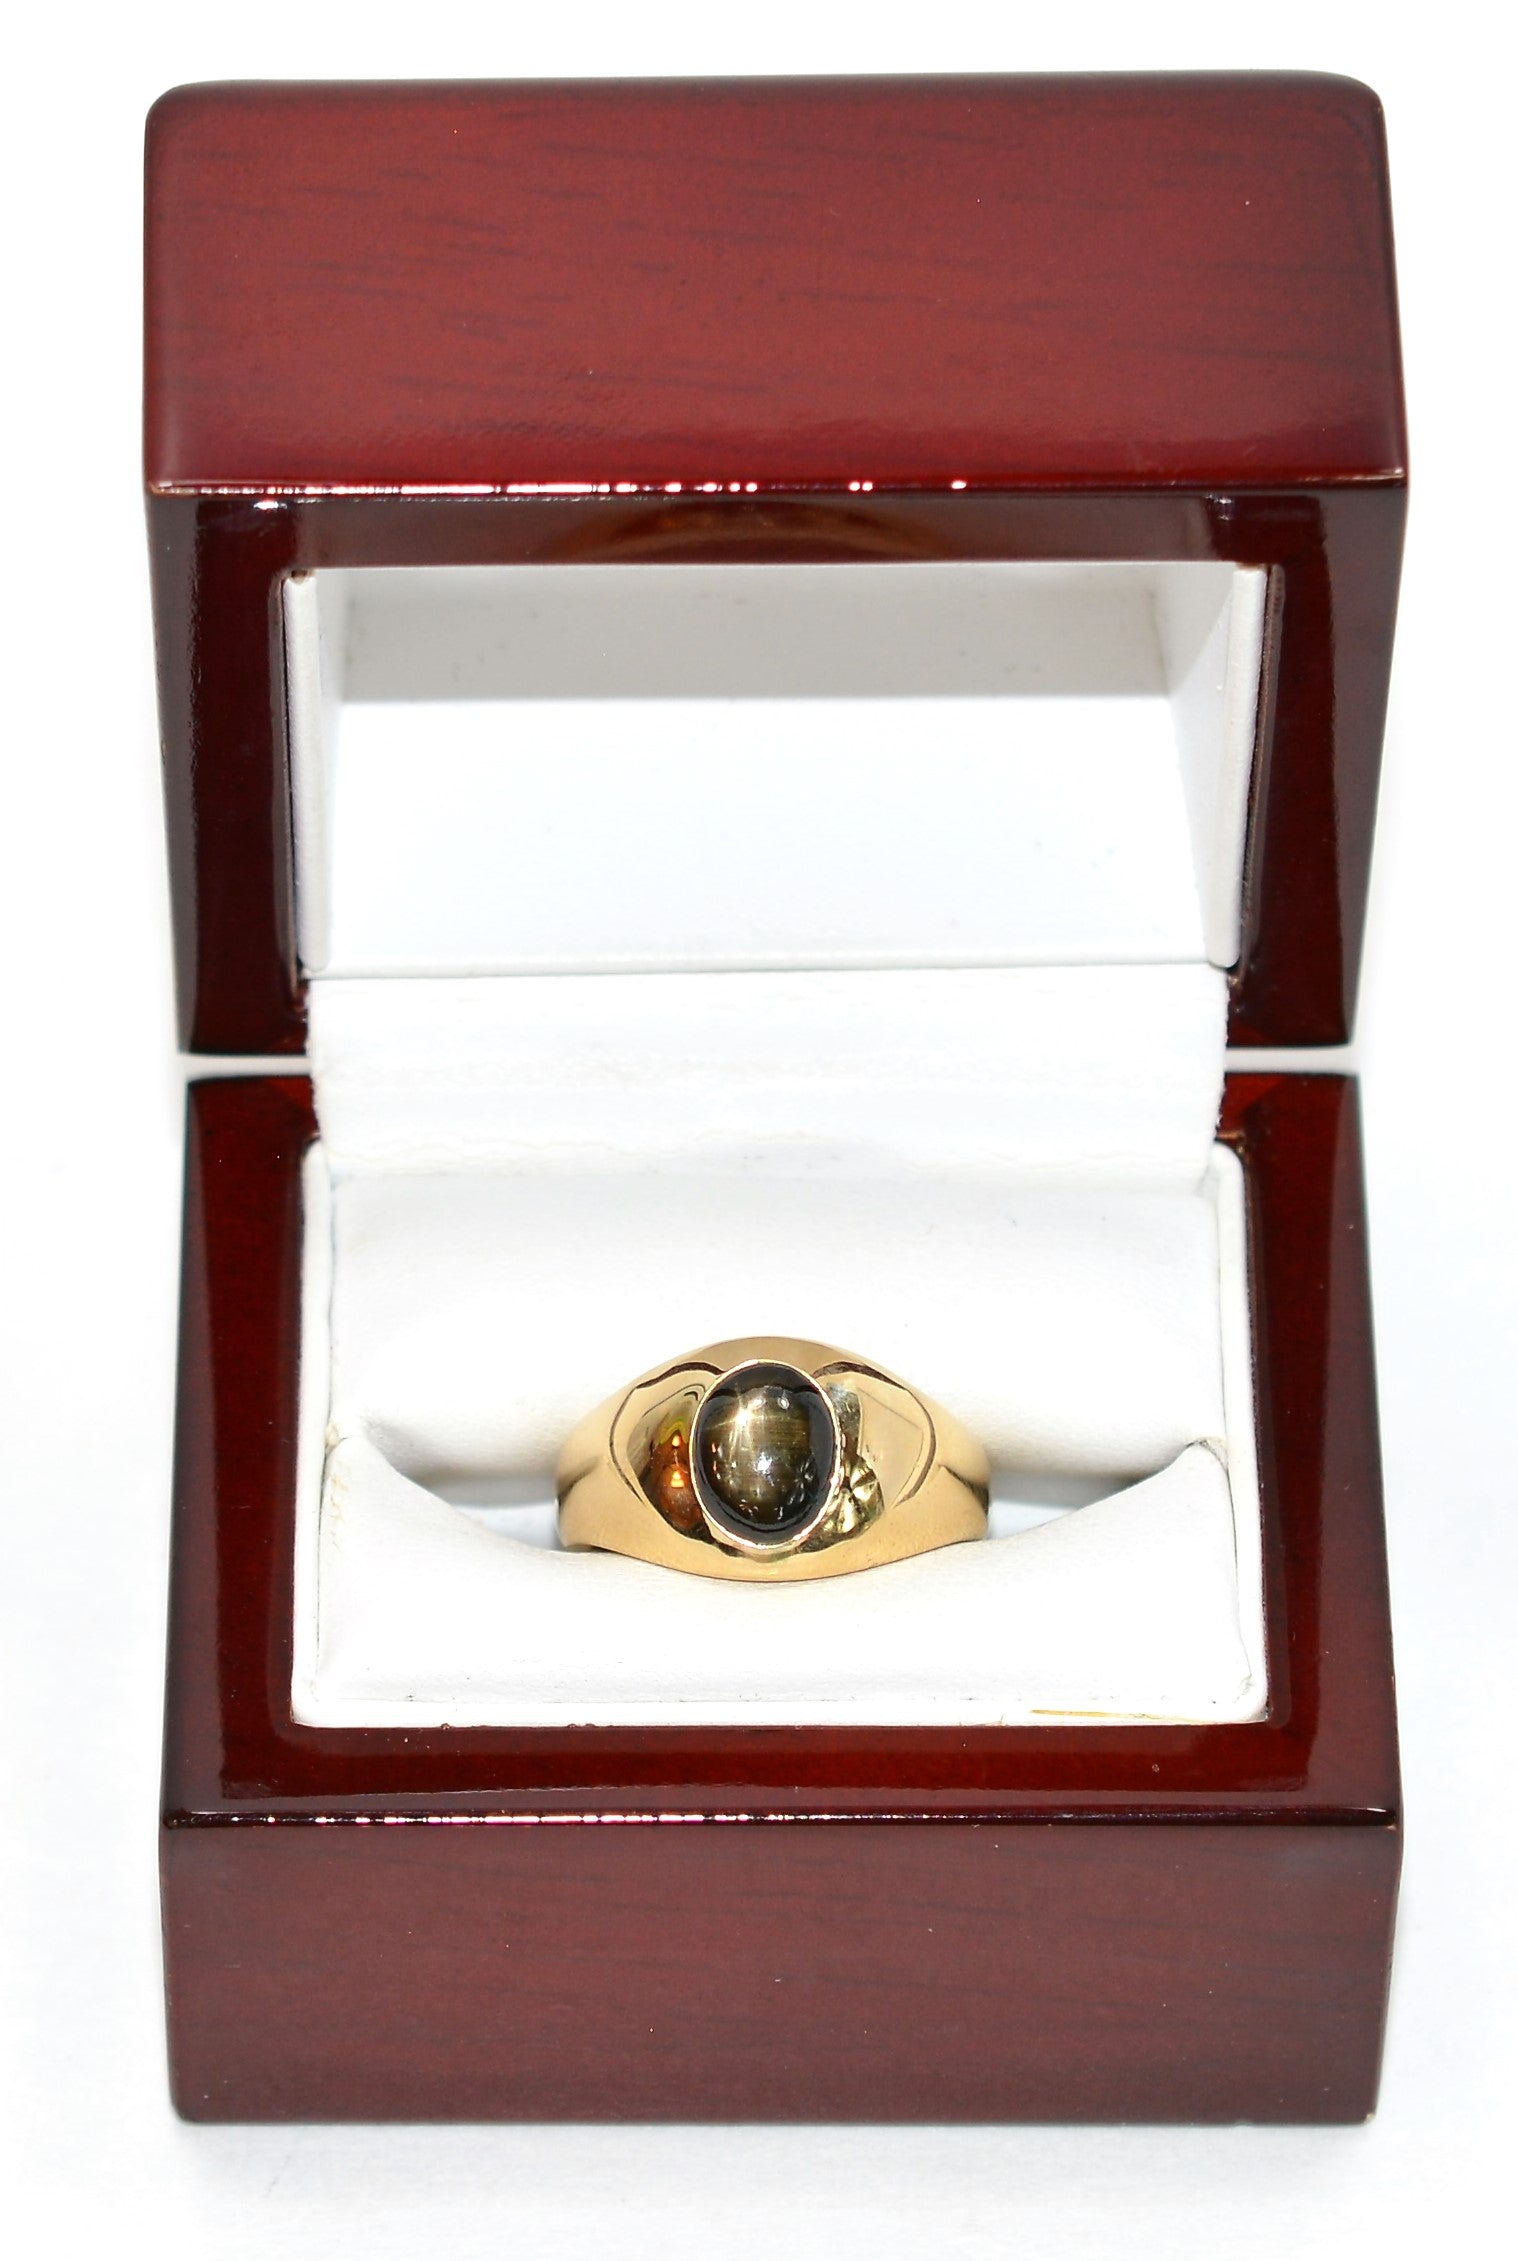 Natural Star Sapphire Ring 14K Solid Gold 2.62ct Gemstone Ring Men's Ring Birthstone Ring Statement Ring Cocktail Ring Vintage Ring Estate